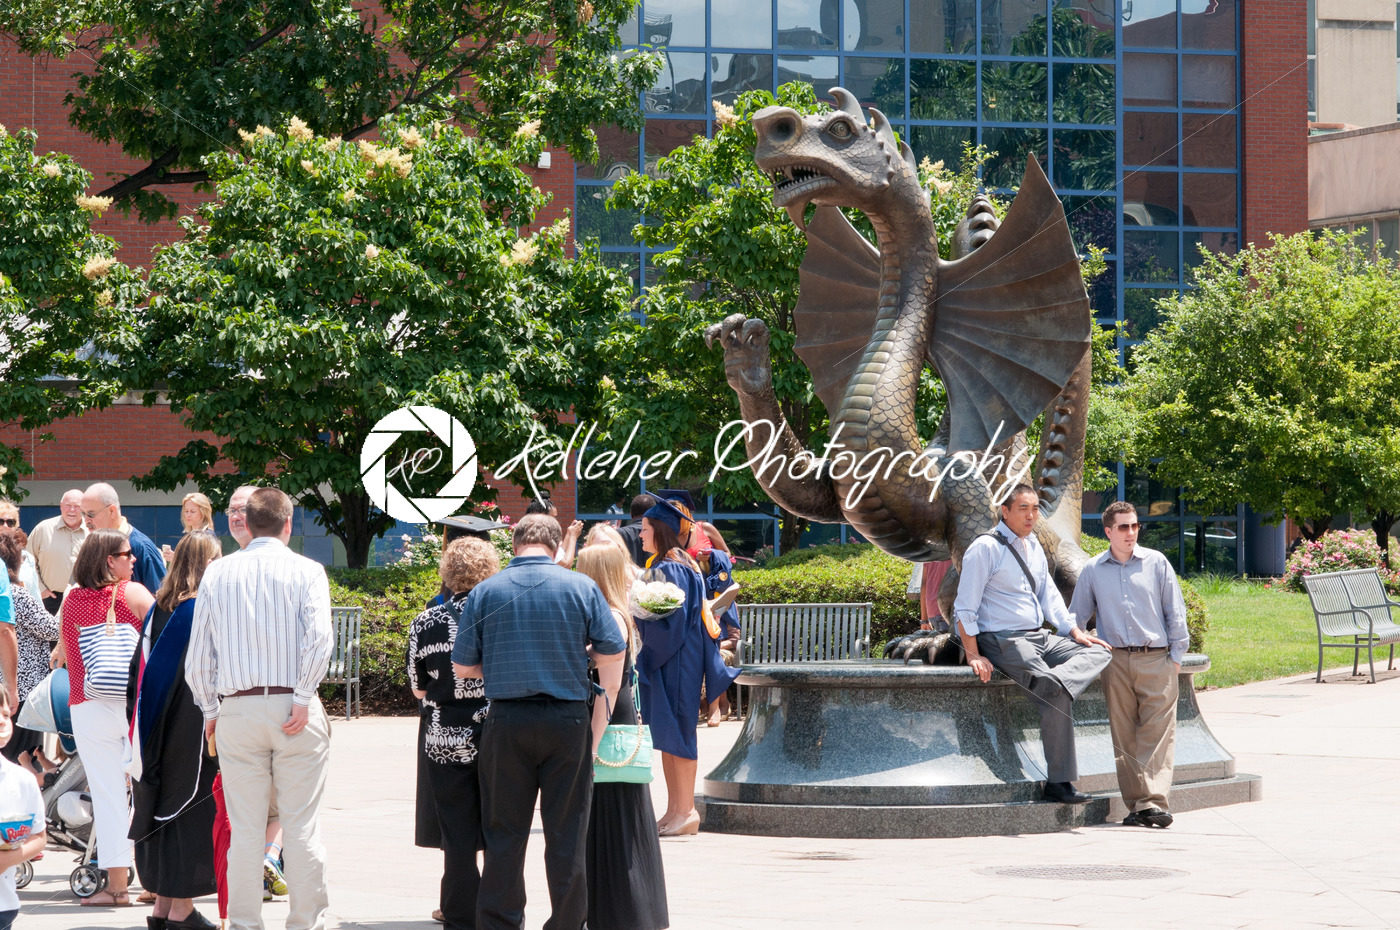 PHILADELPHIA, PA – JUNE 13: Drexel University Campus in the University City section of West Philadelphia on graduation day on June 13, 2014 - Kelleher Photography Store